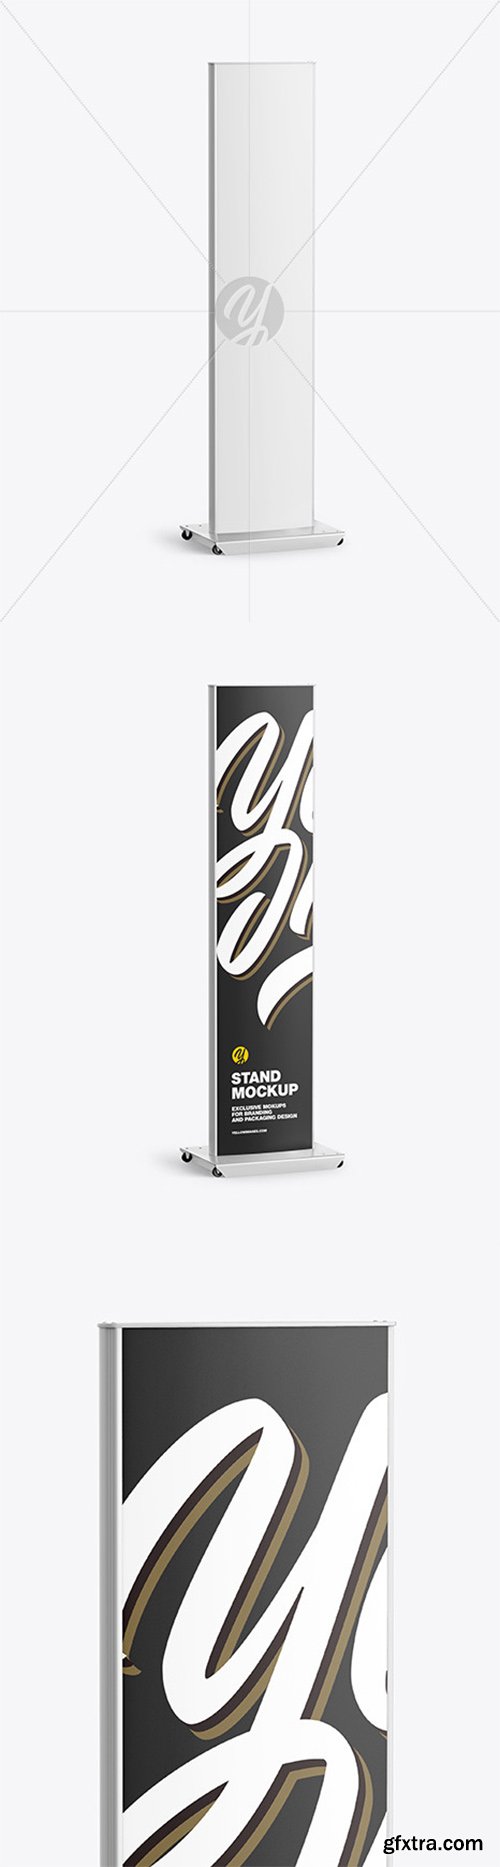 Metallic Stand w/ Plastic Front Mockup 60828